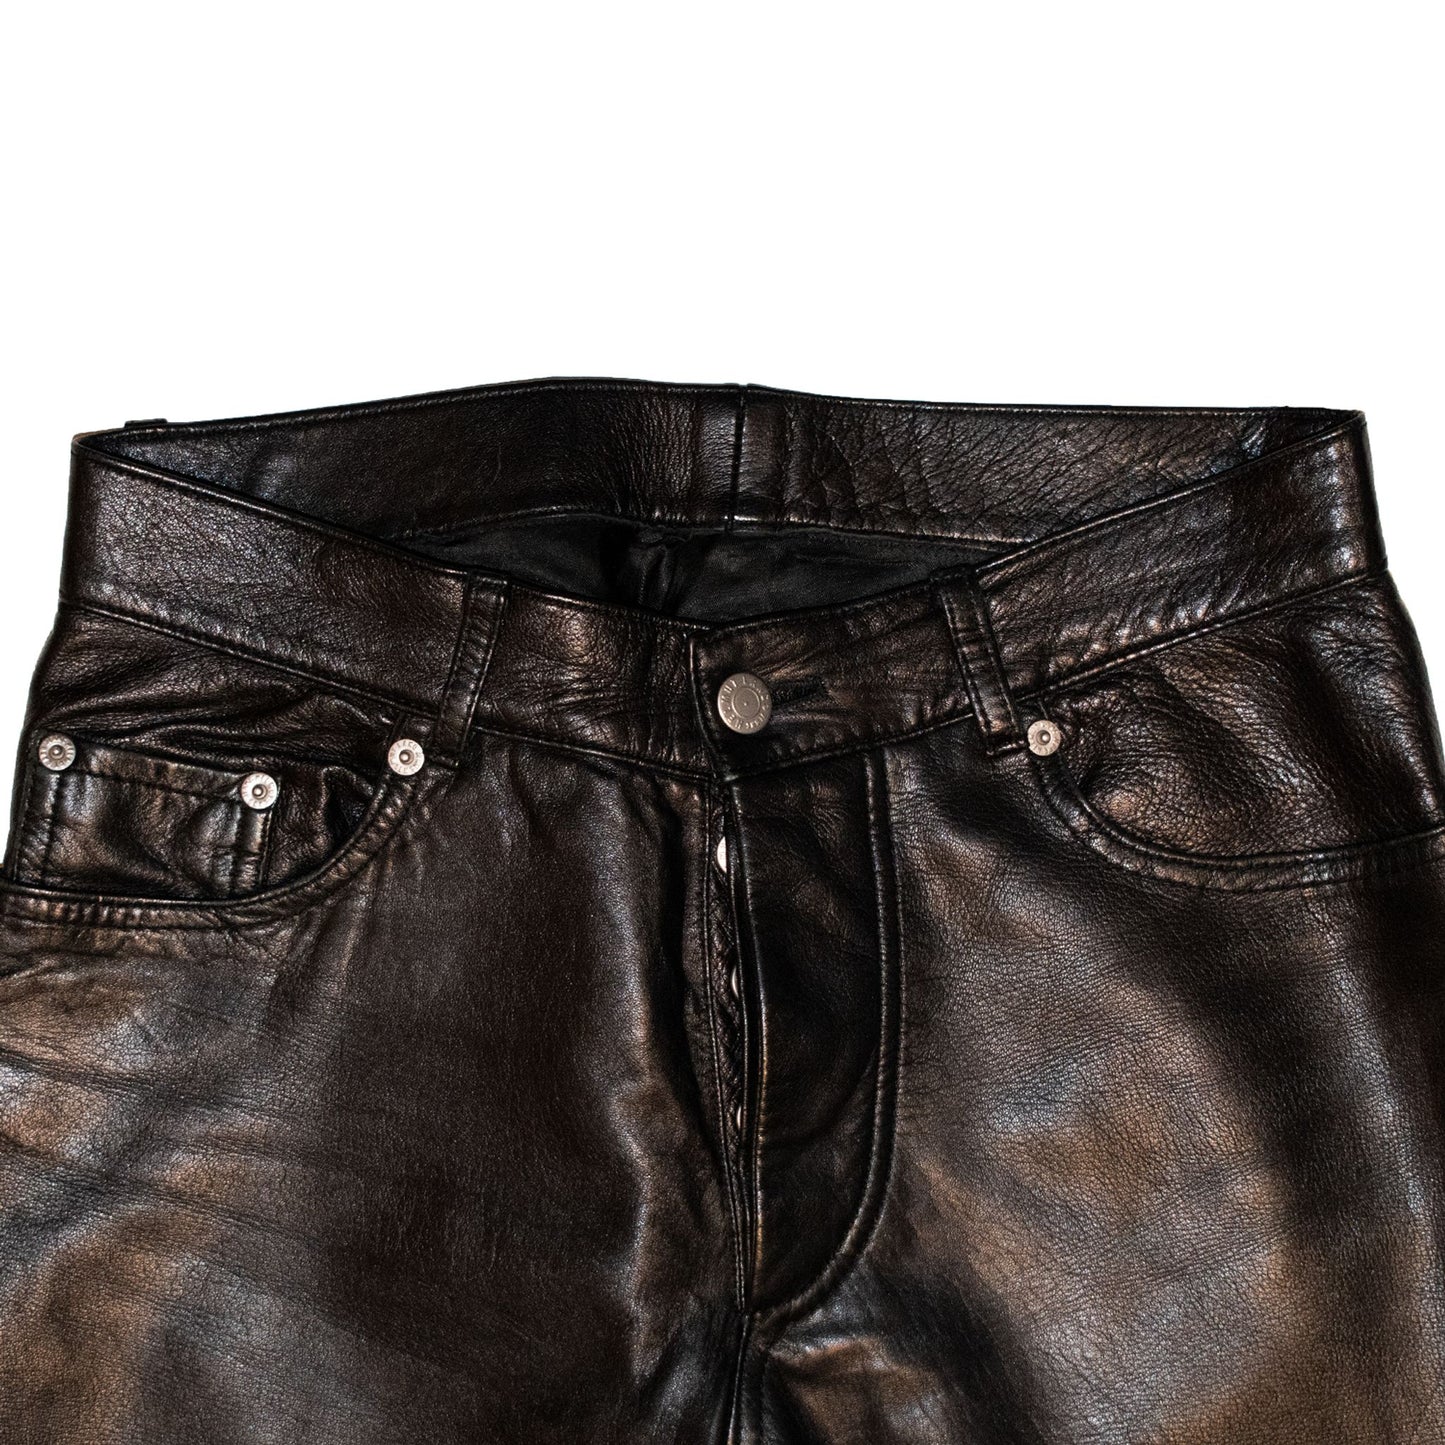 Helmut Lang Leather Pants - 1999